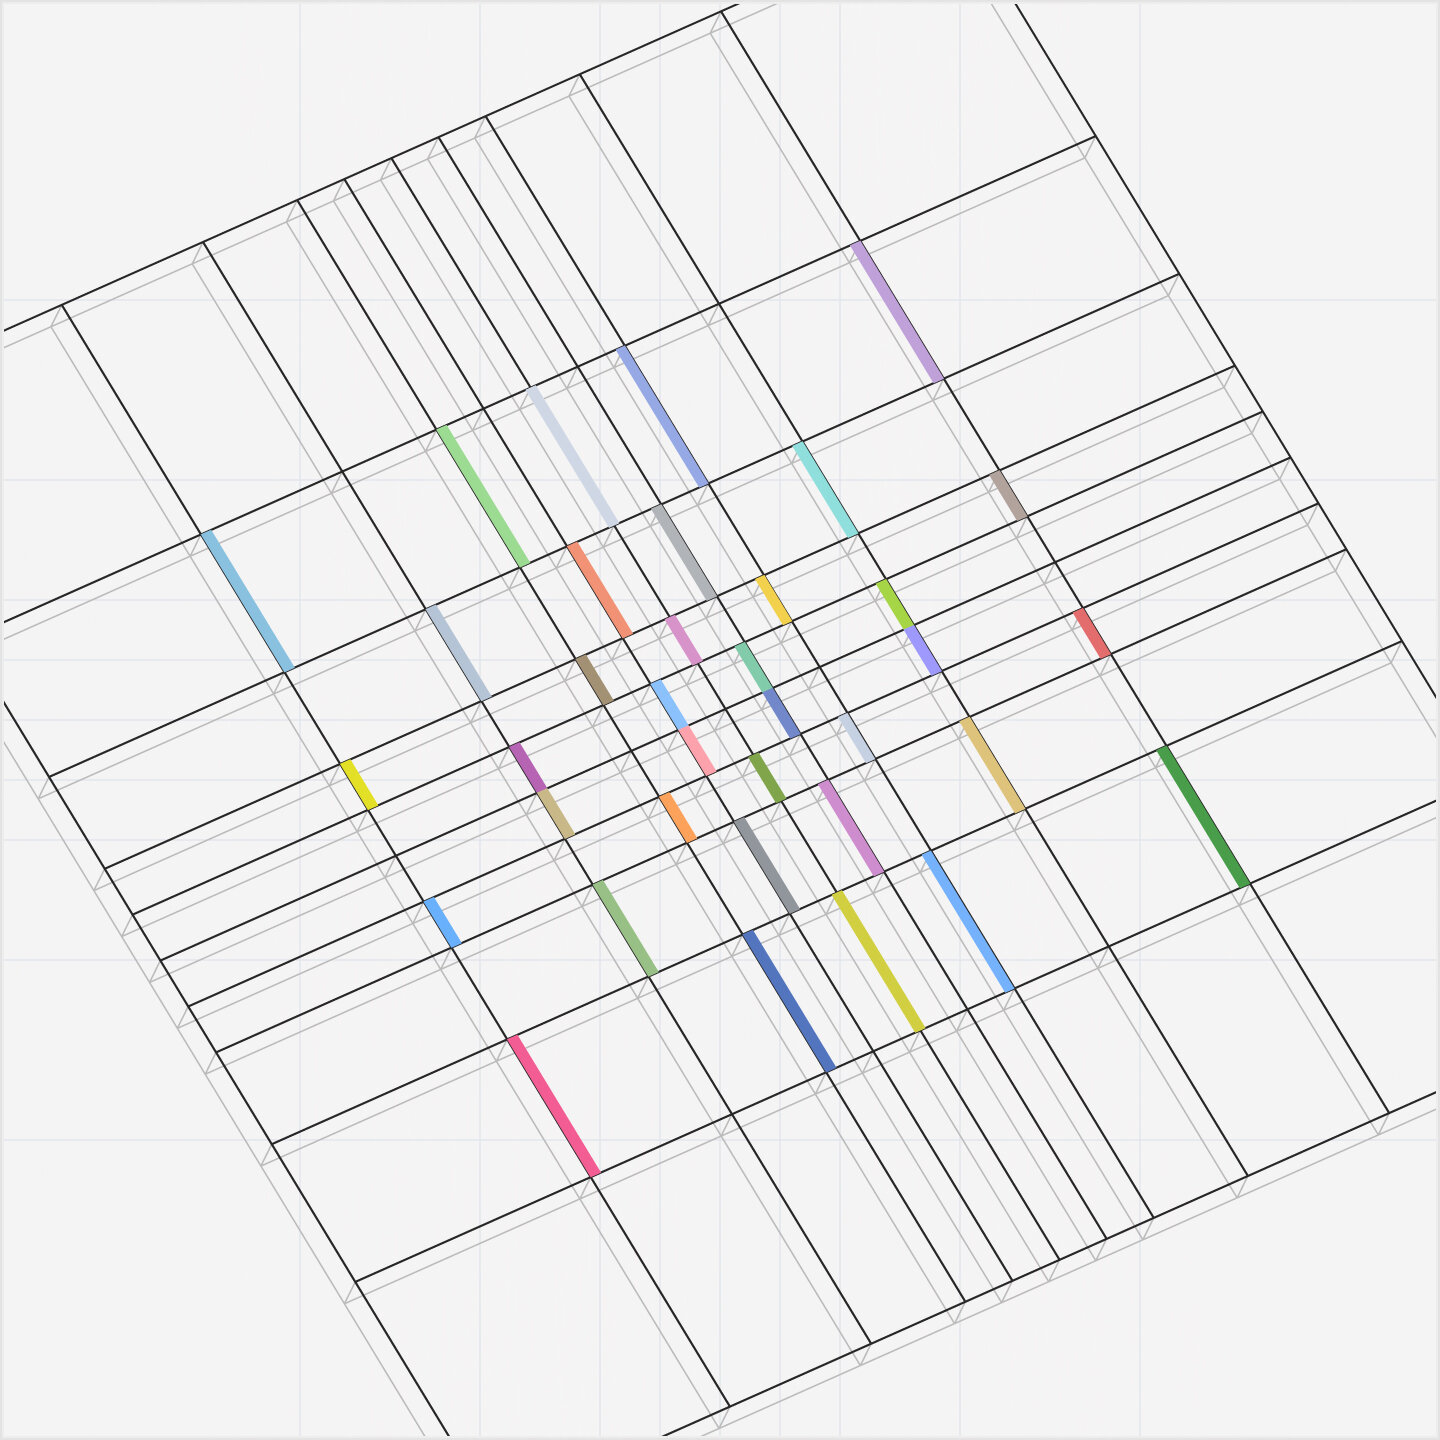 Fibonacci-sequence-space [20200507] [Color-elements], acrylic on canvas